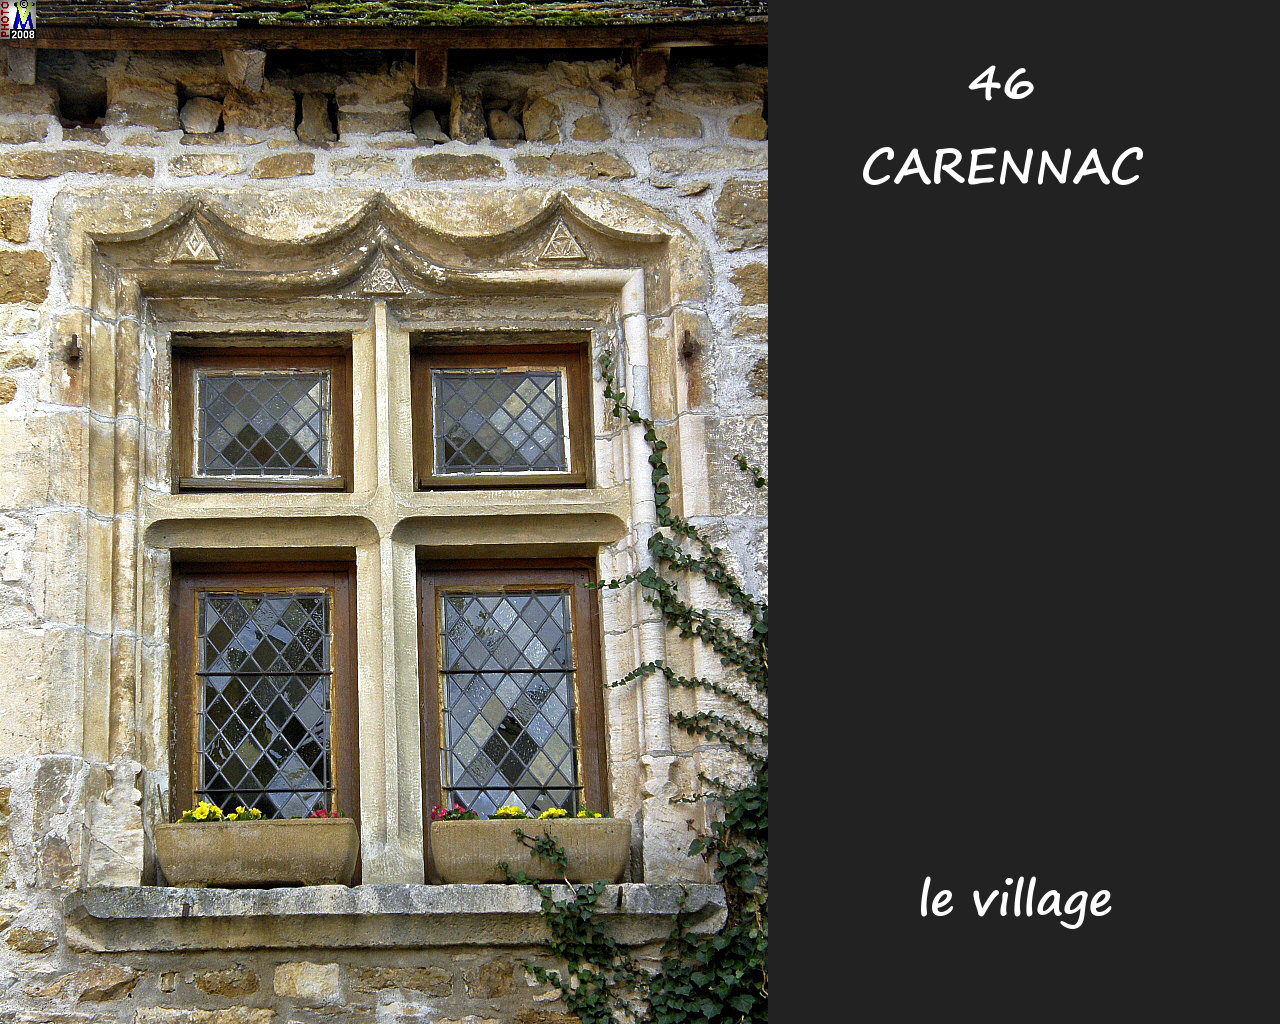 46CARENNAC_village_166.jpg